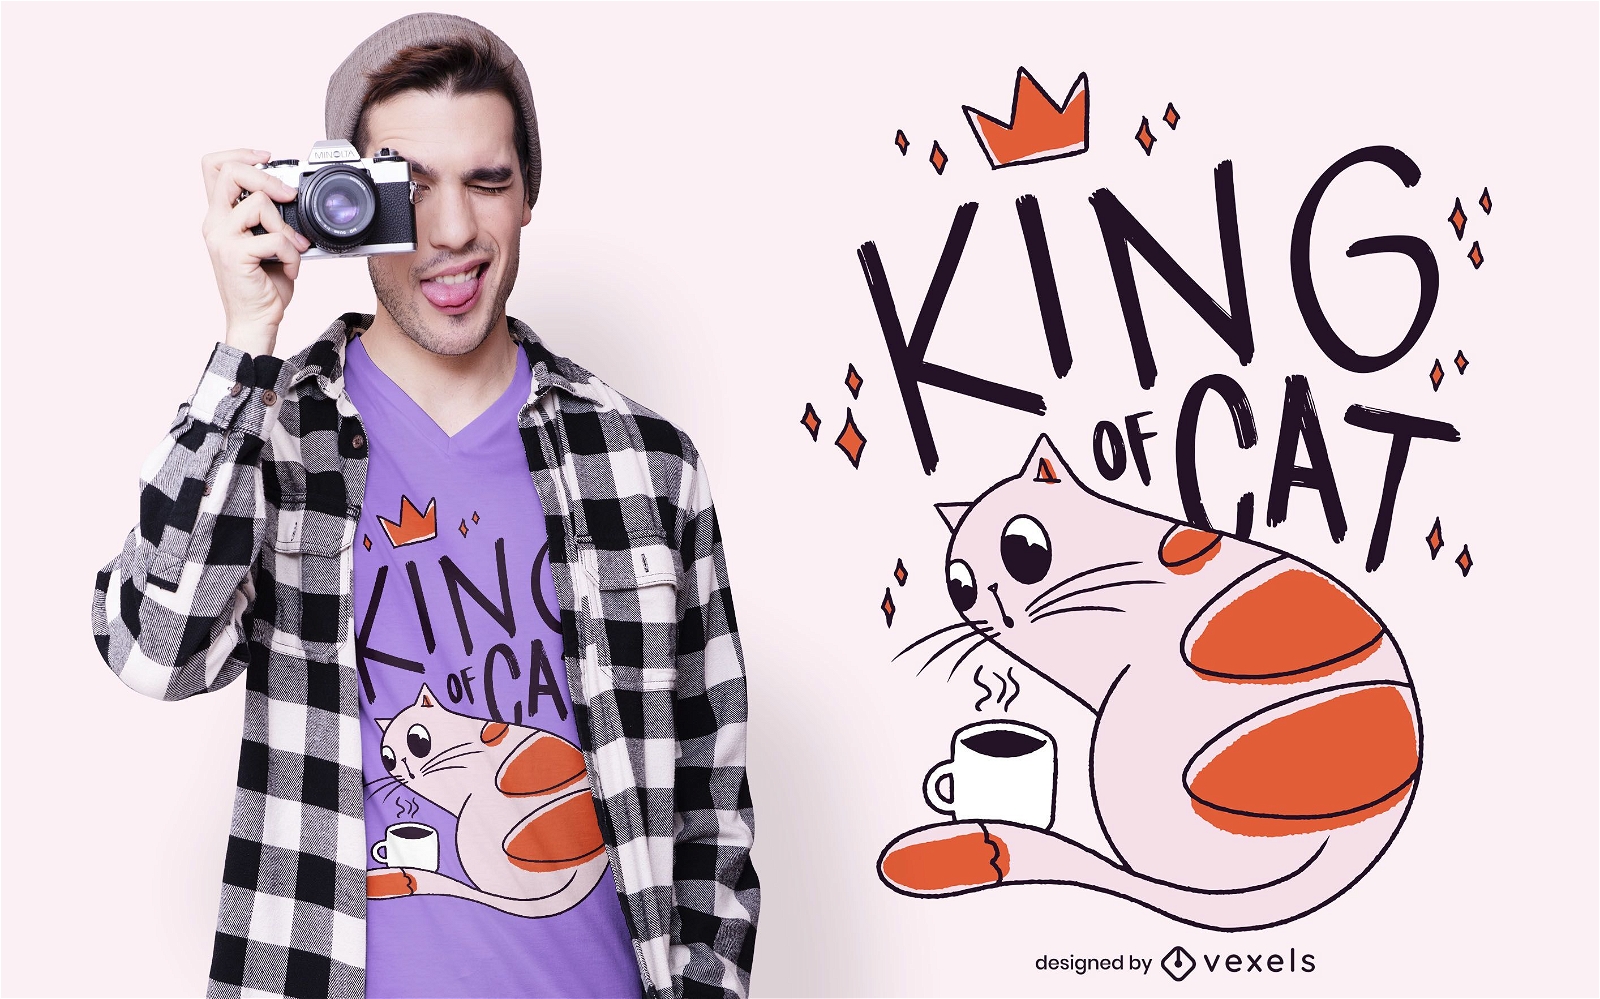 King of cat t-shirt design